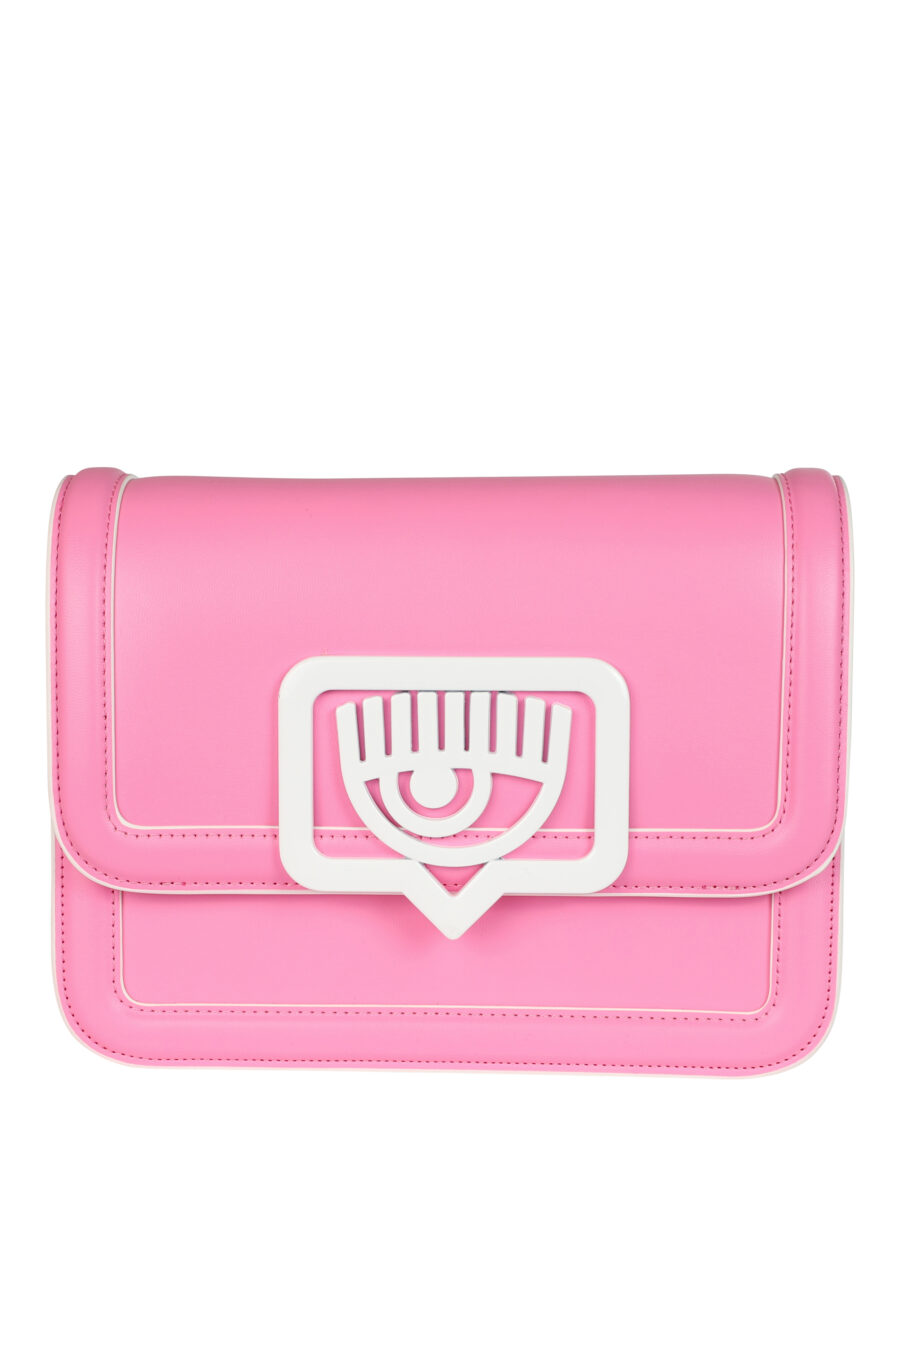 Pink shoulder bag with metal eye logo - 8052672351548